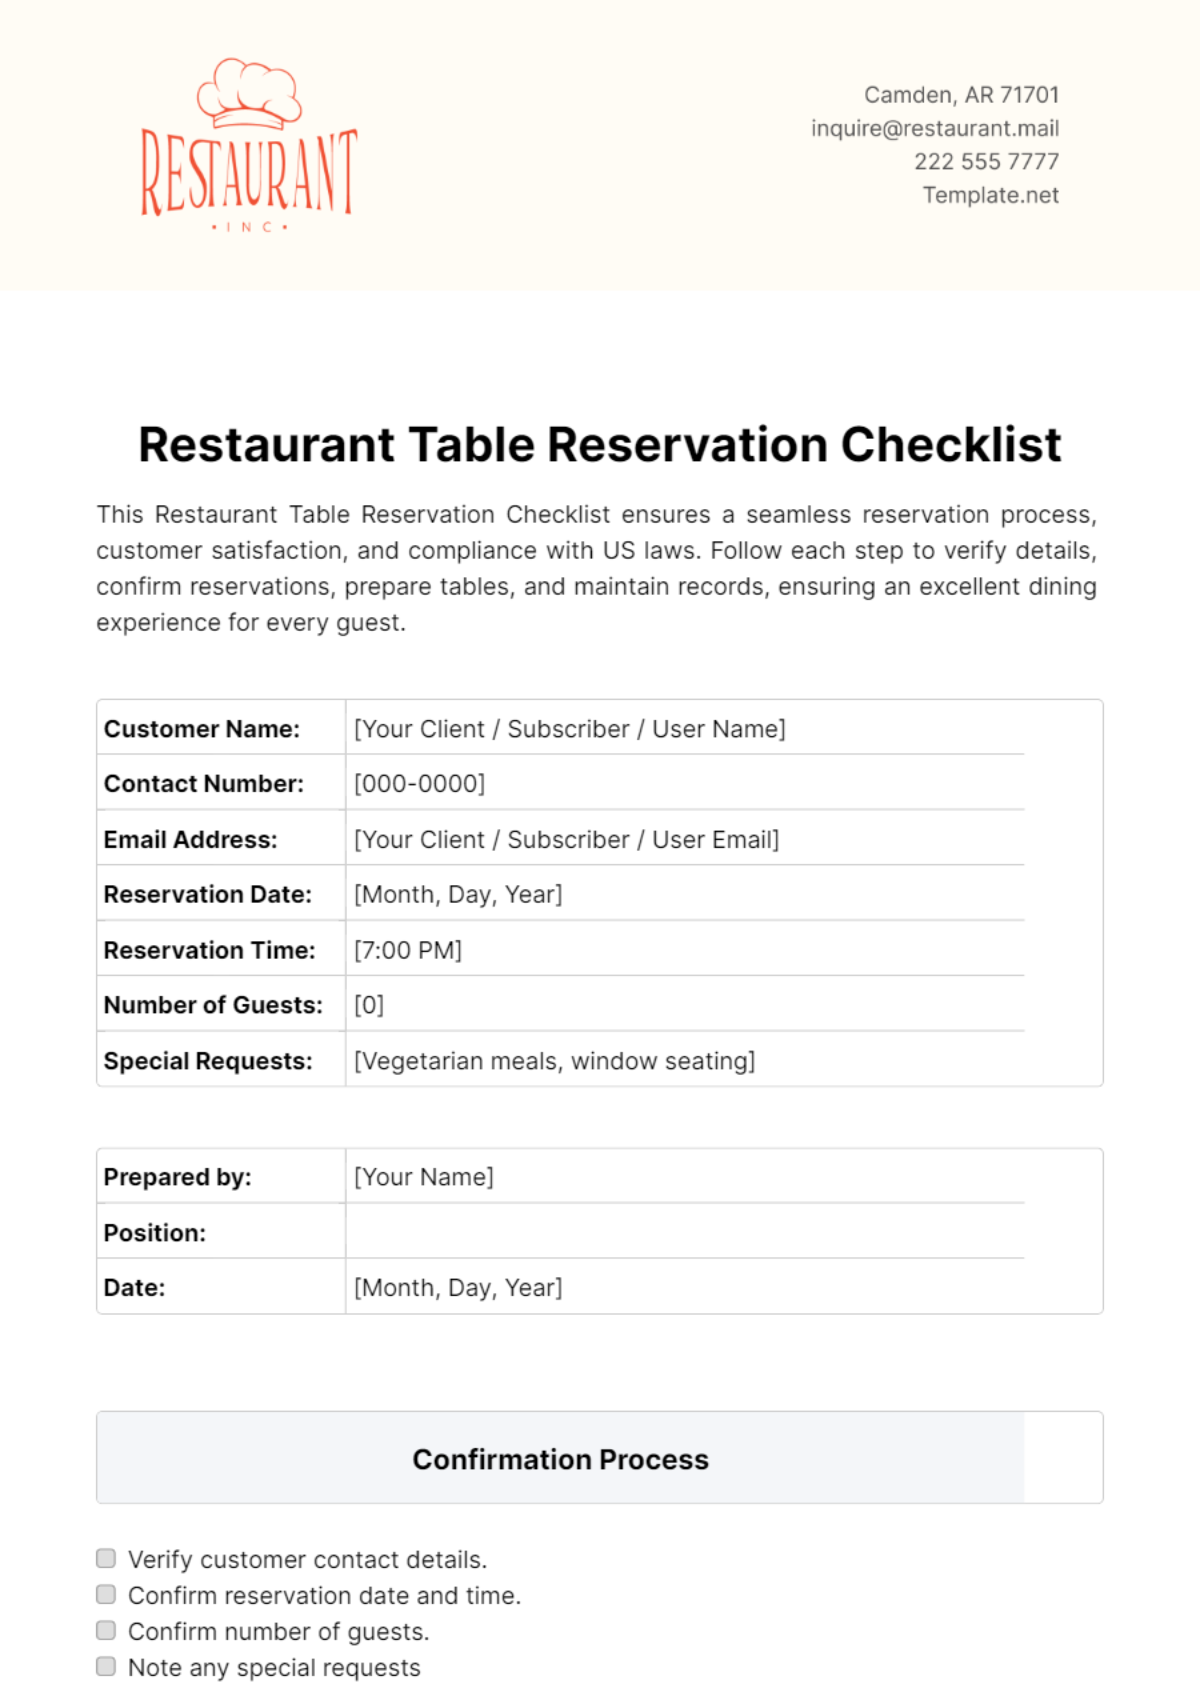 Restaurant Table Reservation Checklist Template